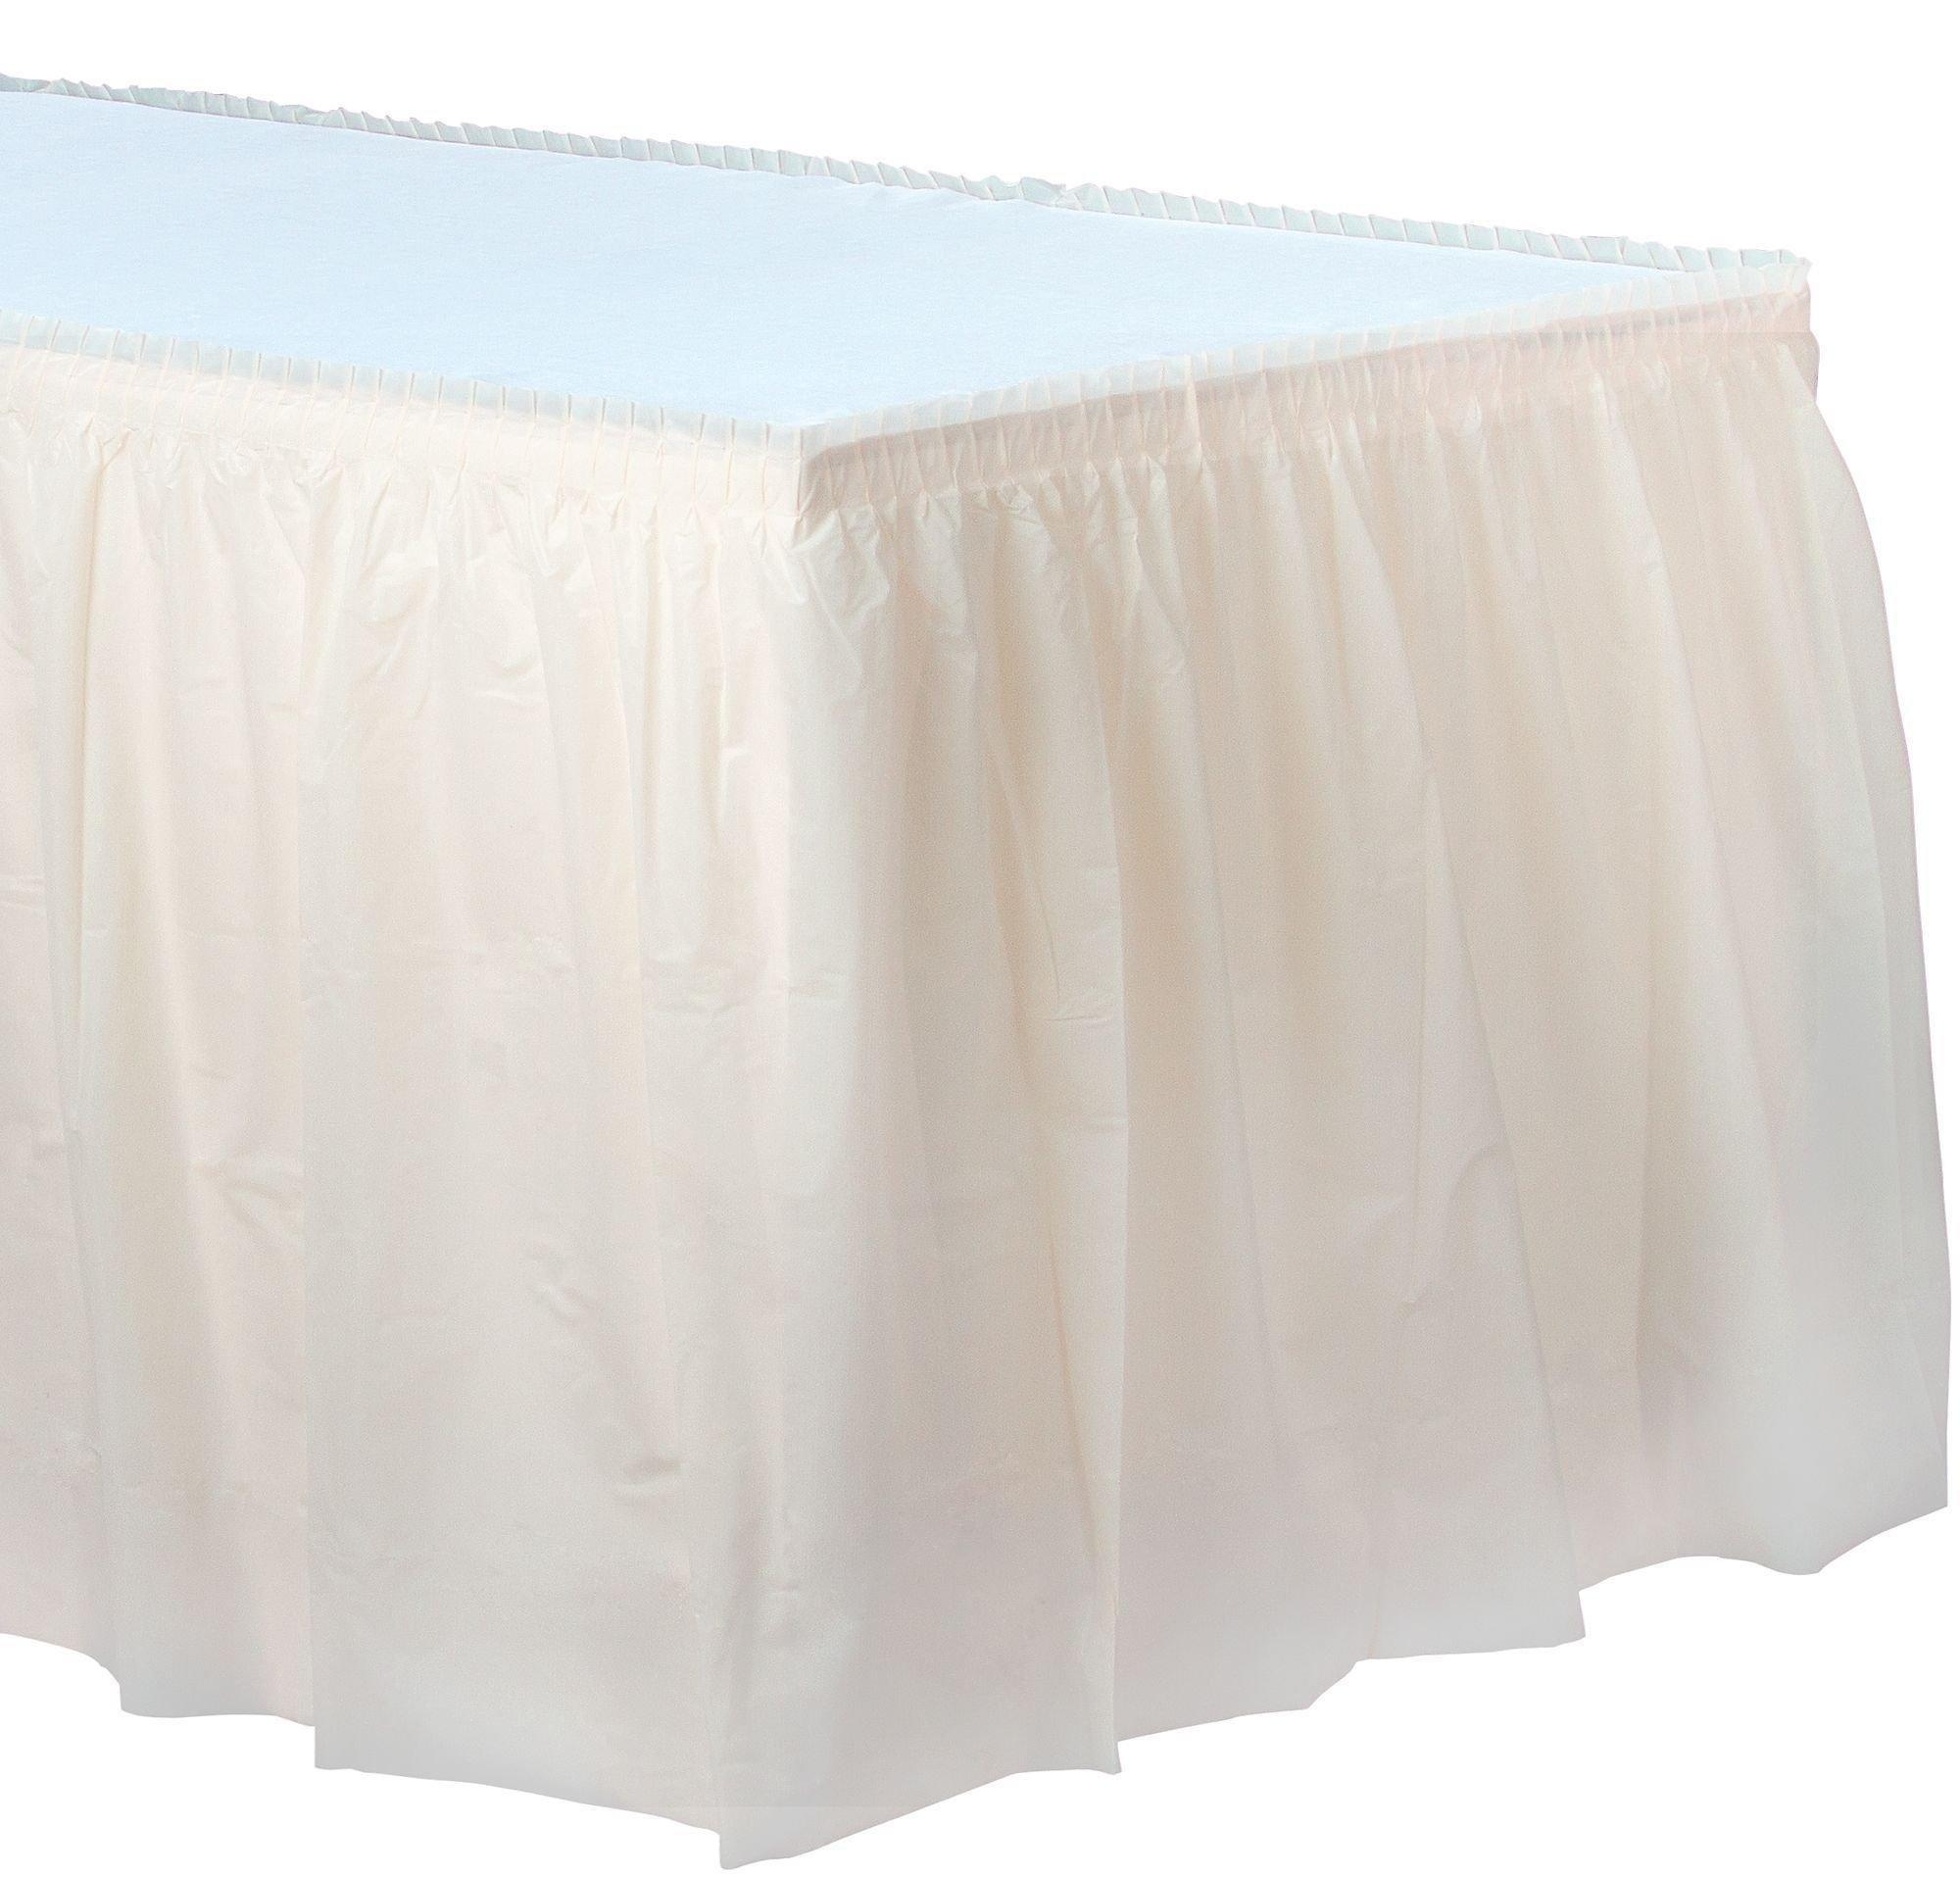 Vanilla Cream Plastic Table Skirt, 21ft x 29in